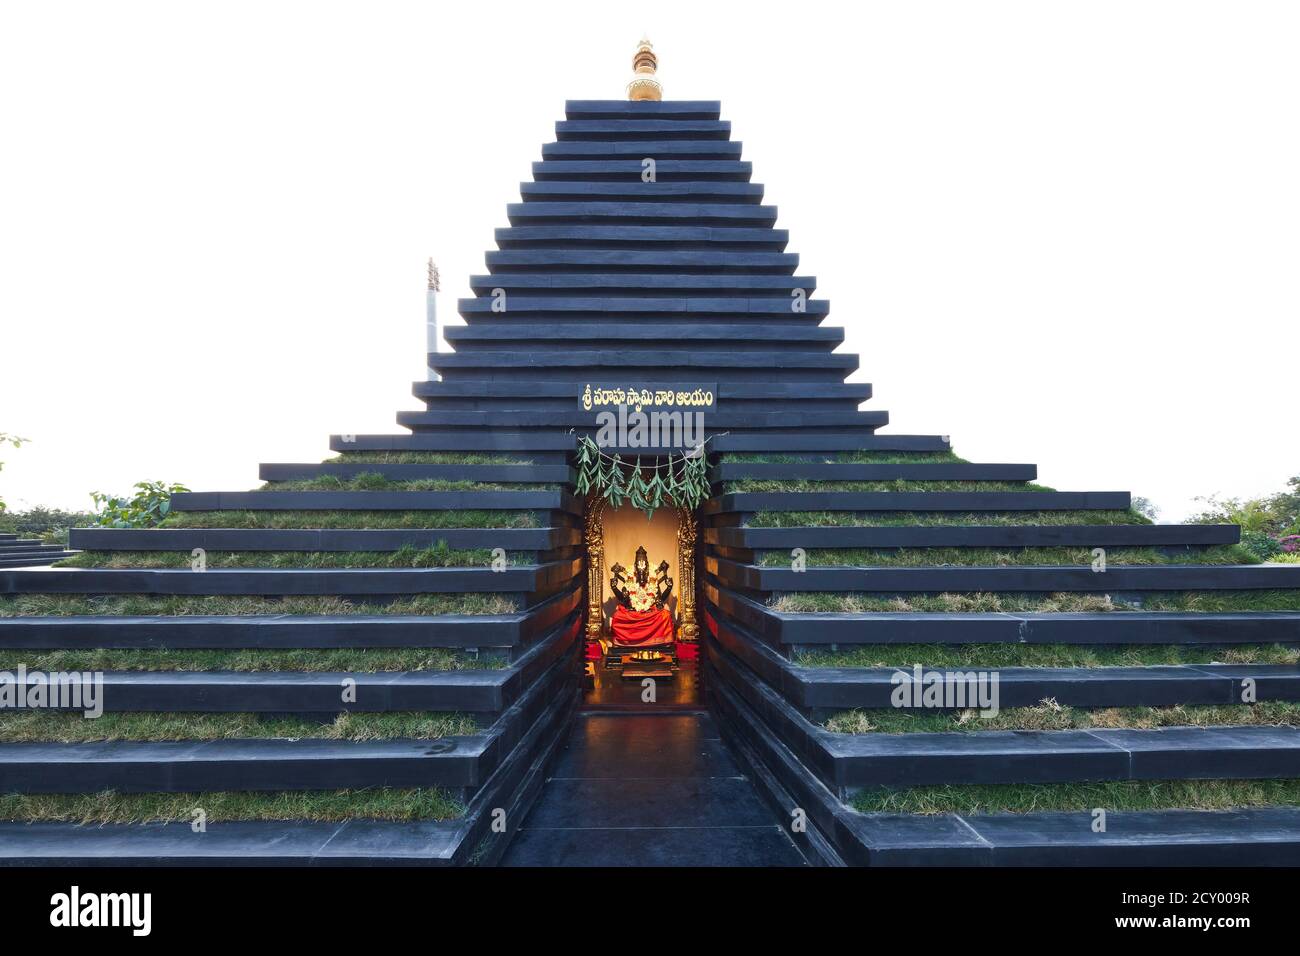 Vue globale. Temple Balaji, Andhra Pradesh, Inde. Architecte: Sameep Padora et associés , 2020. Banque D'Images